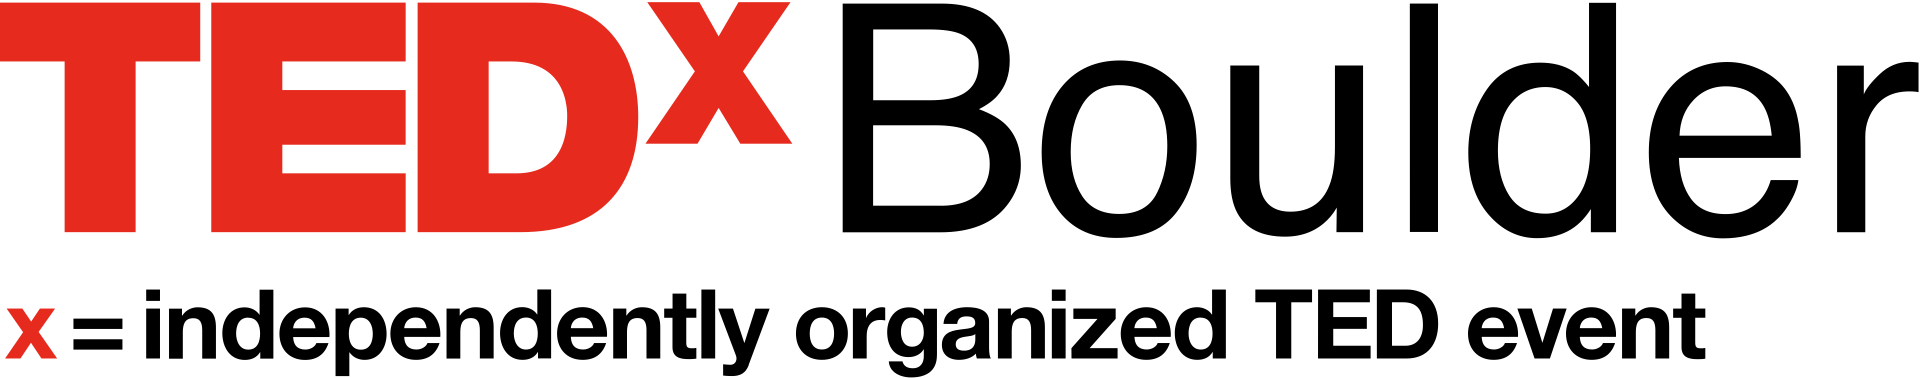 TedxBoulder - Logo - Large